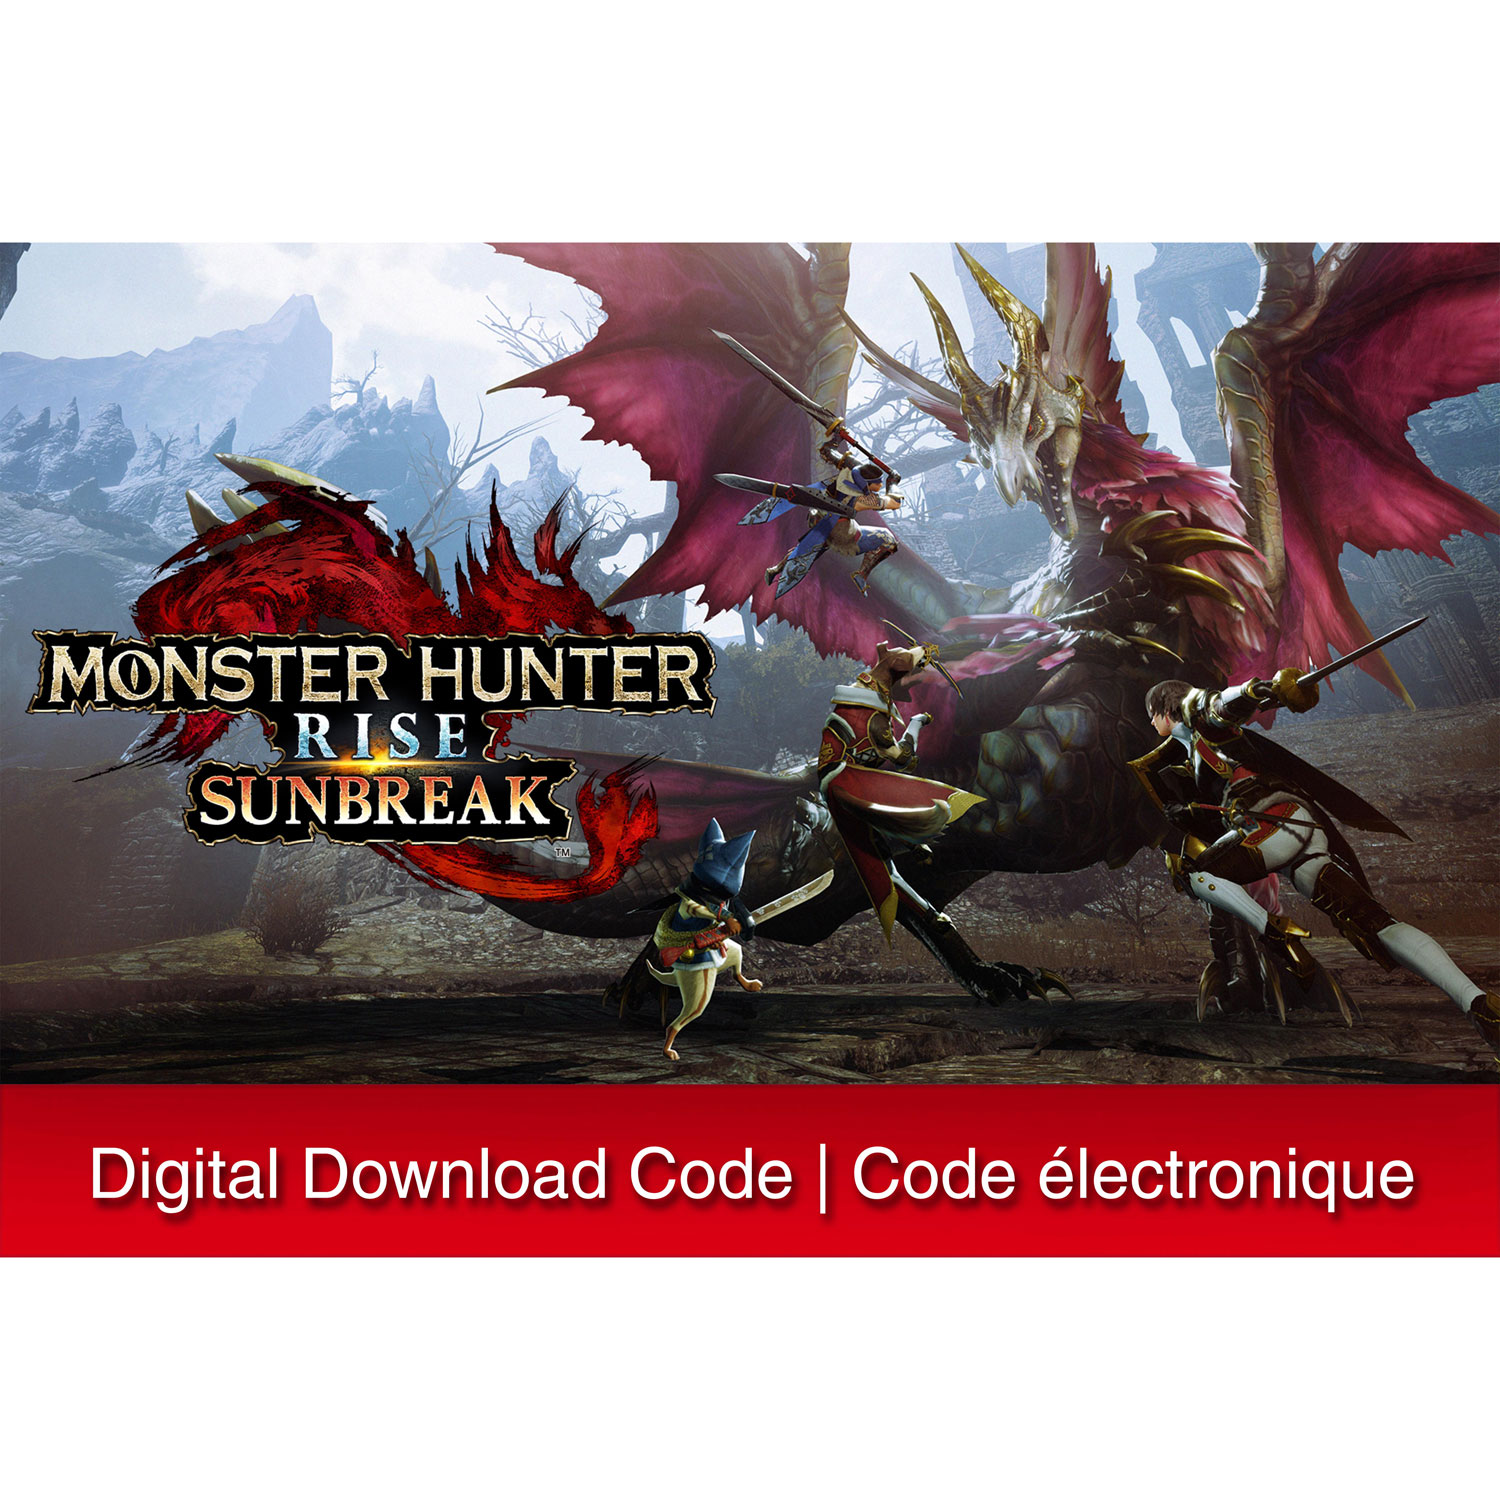 Monster Hunter Rise: Sunbreak (Switch) - Digital Download